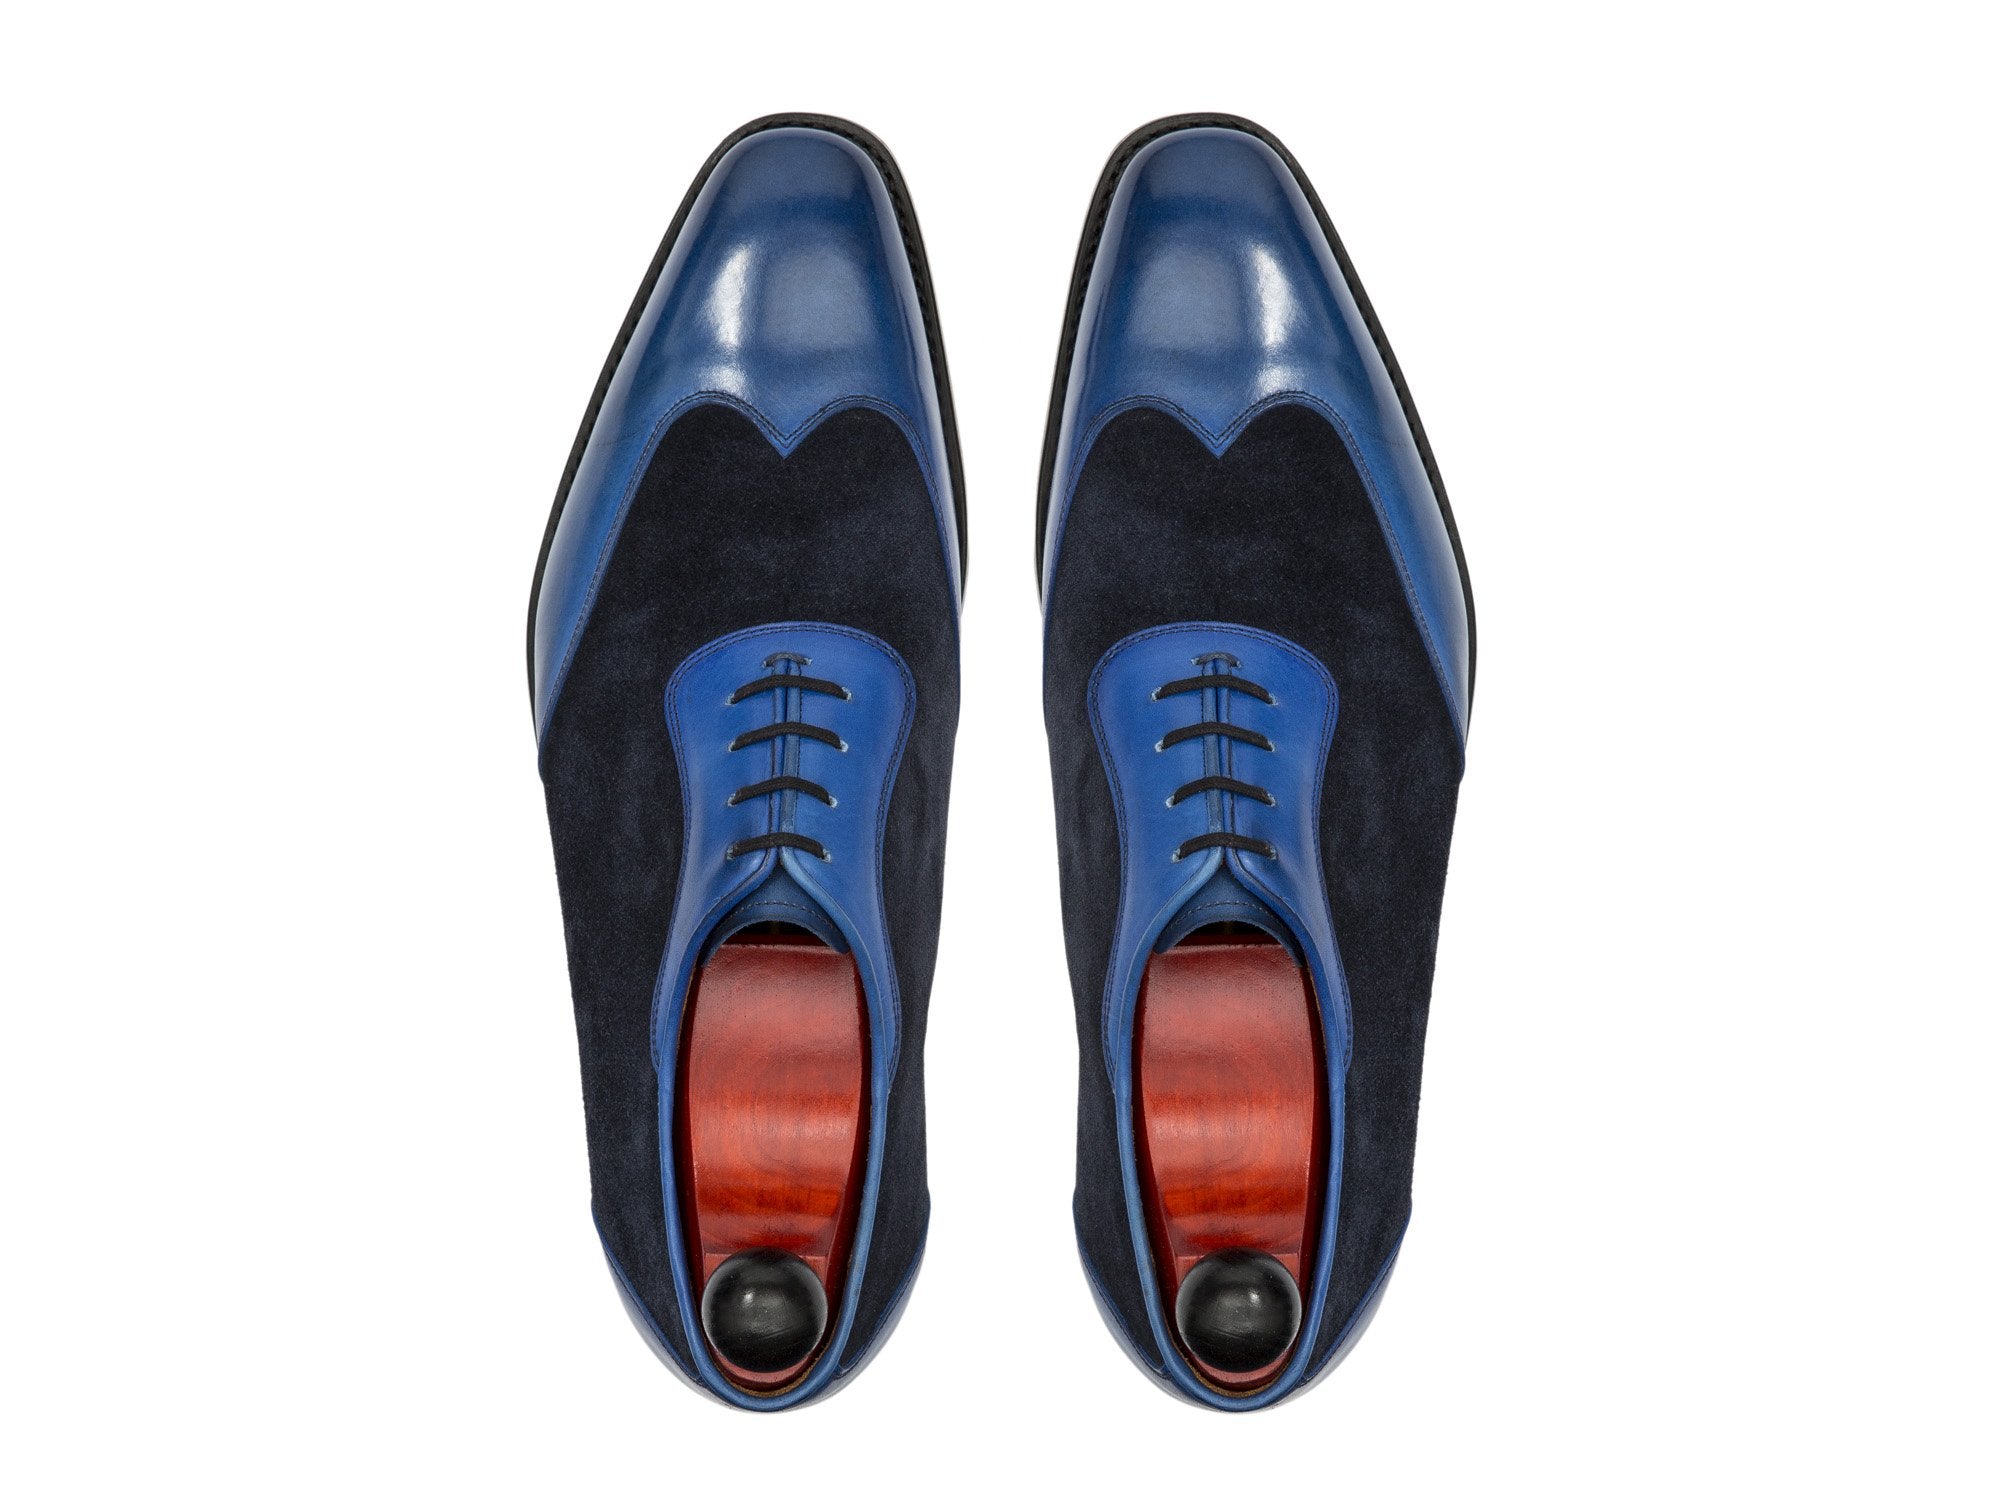 J.FitzPatrick Footwear - Rainier - Sky Blue Calf / Navy Suede - Country Rubber Sole - LPB Last